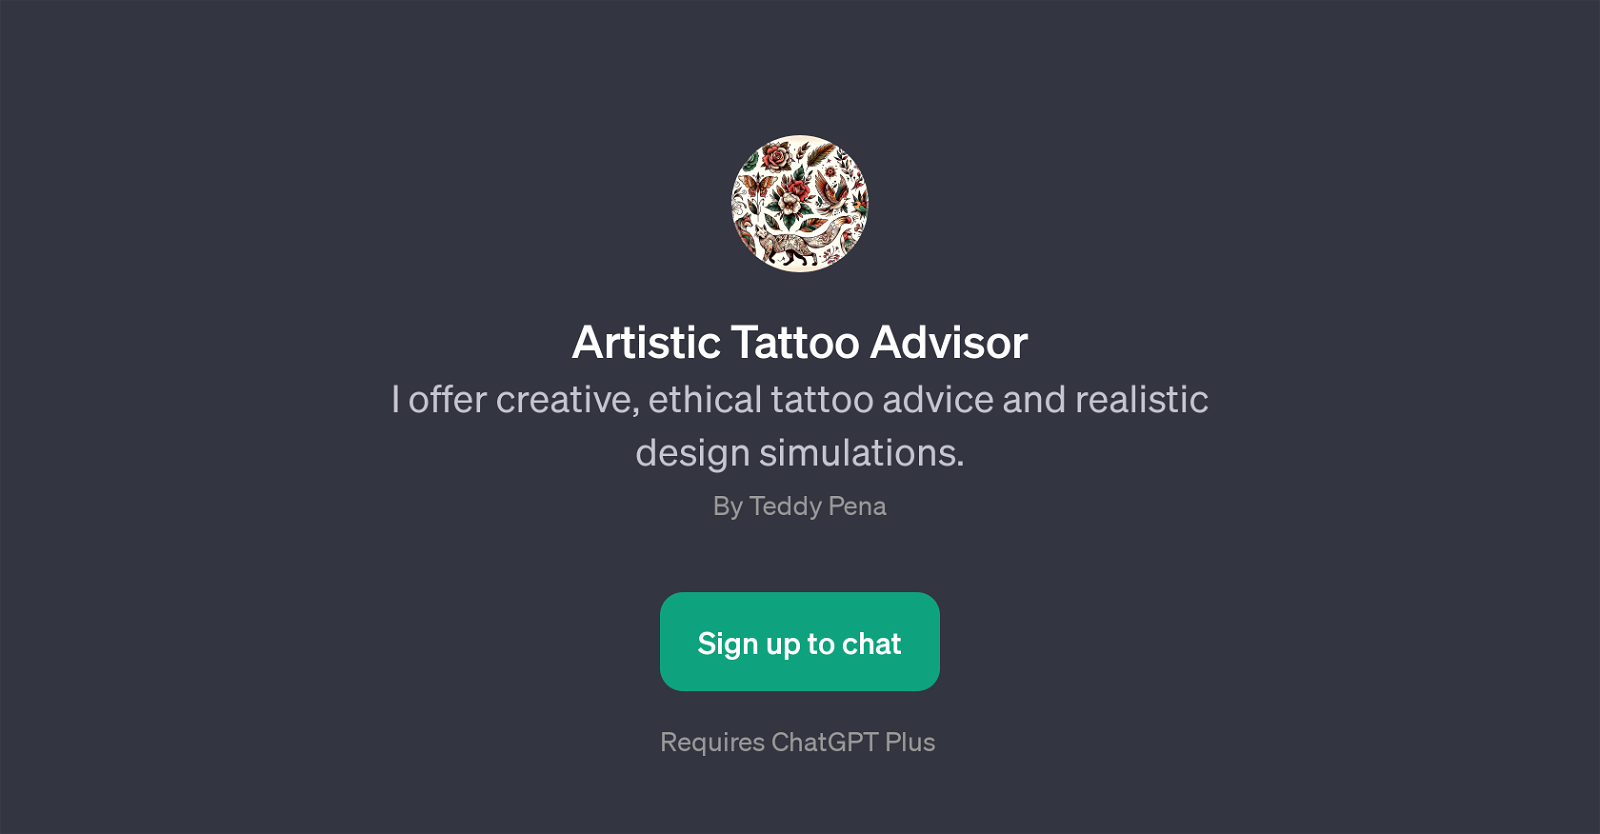 Artistic Tattoo Advisor website